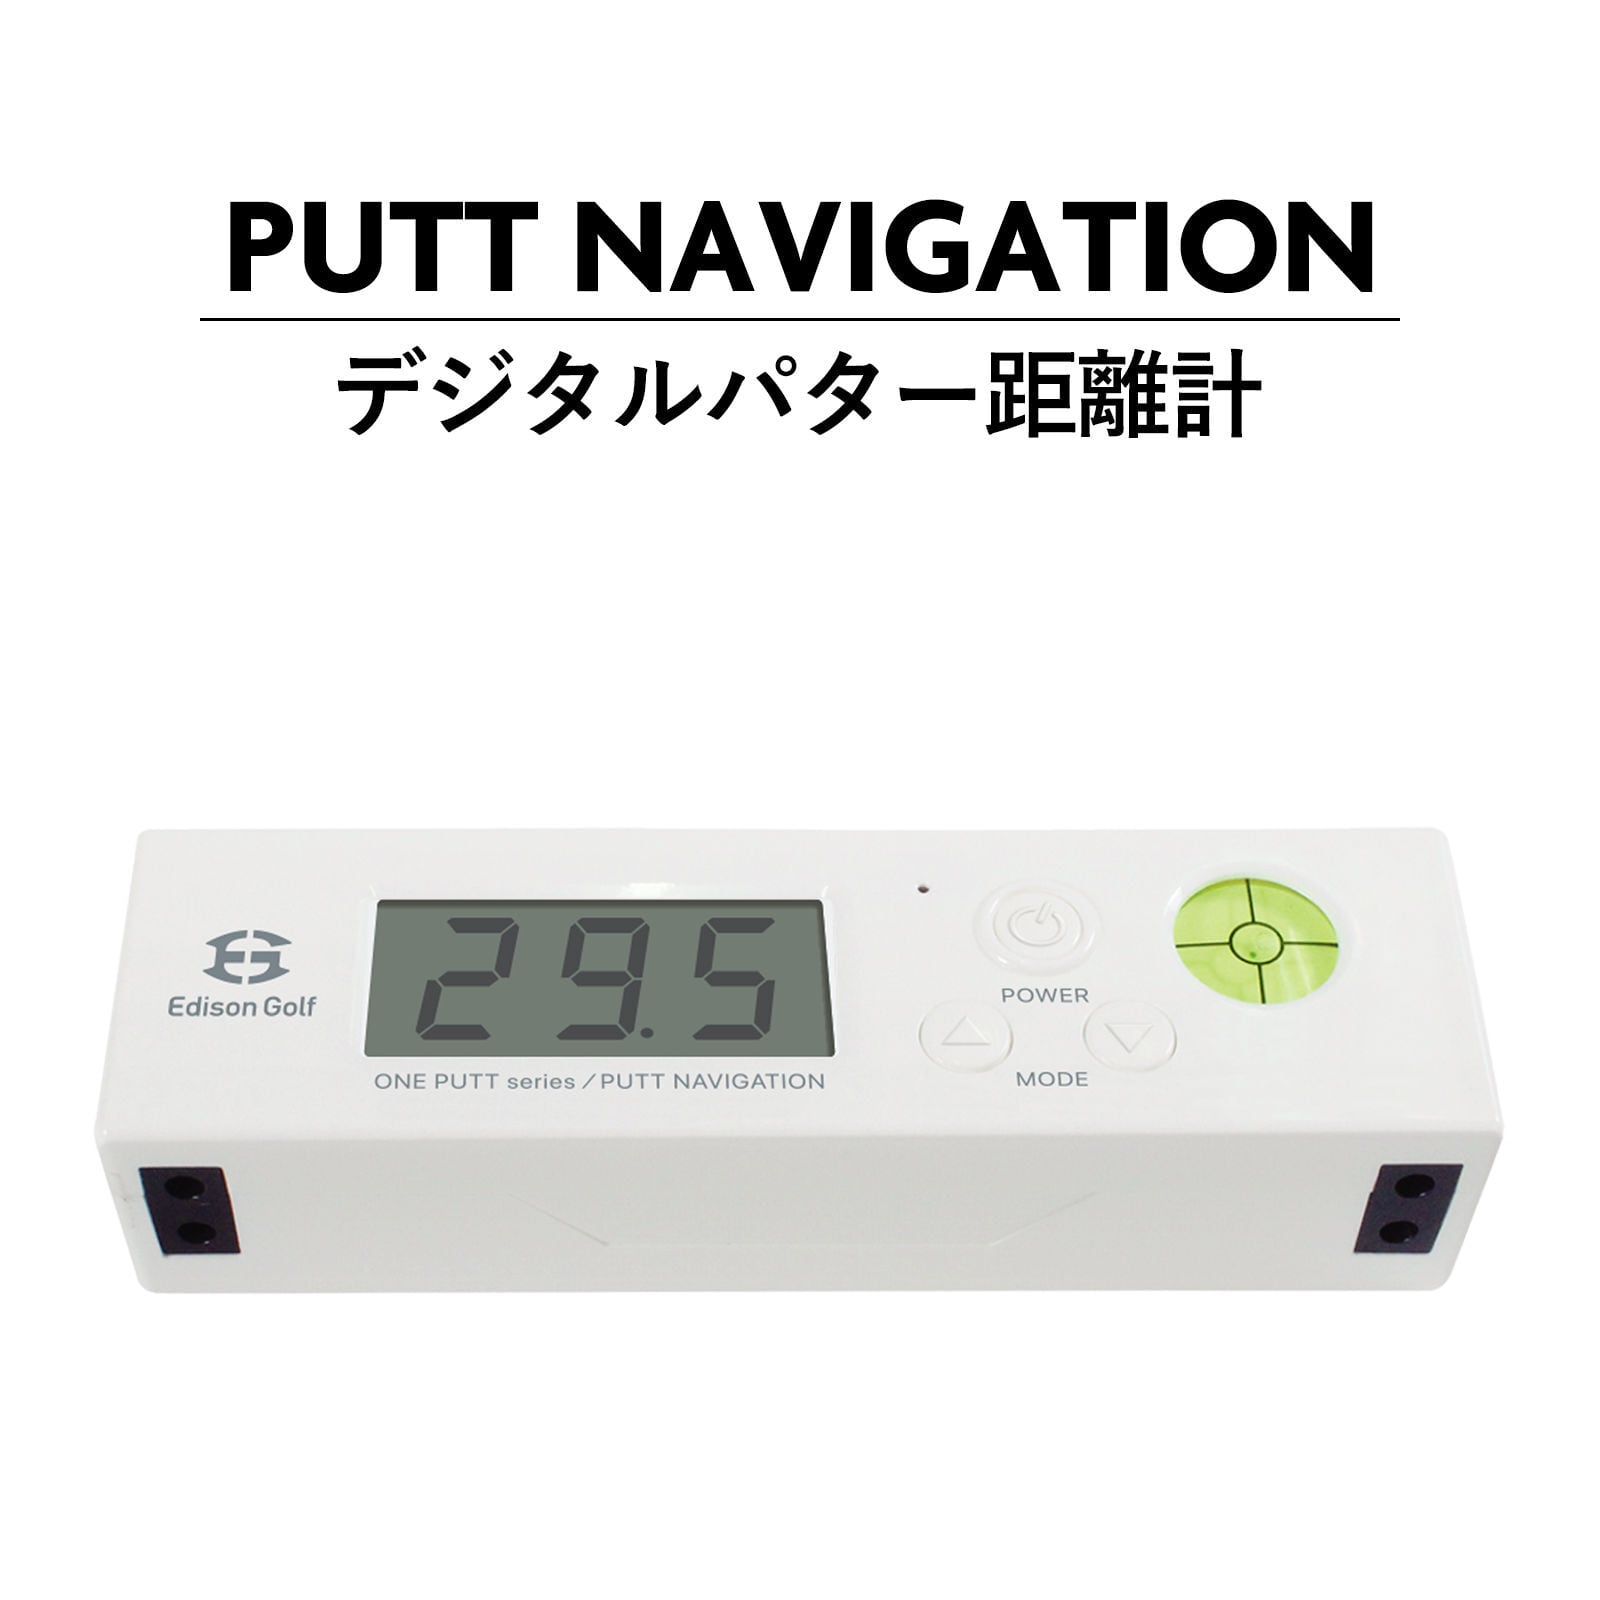 PUTT NAVIGATION（パットナビゲーション）パター用デジタル距離計 | EDISONGOLF powered by BASE